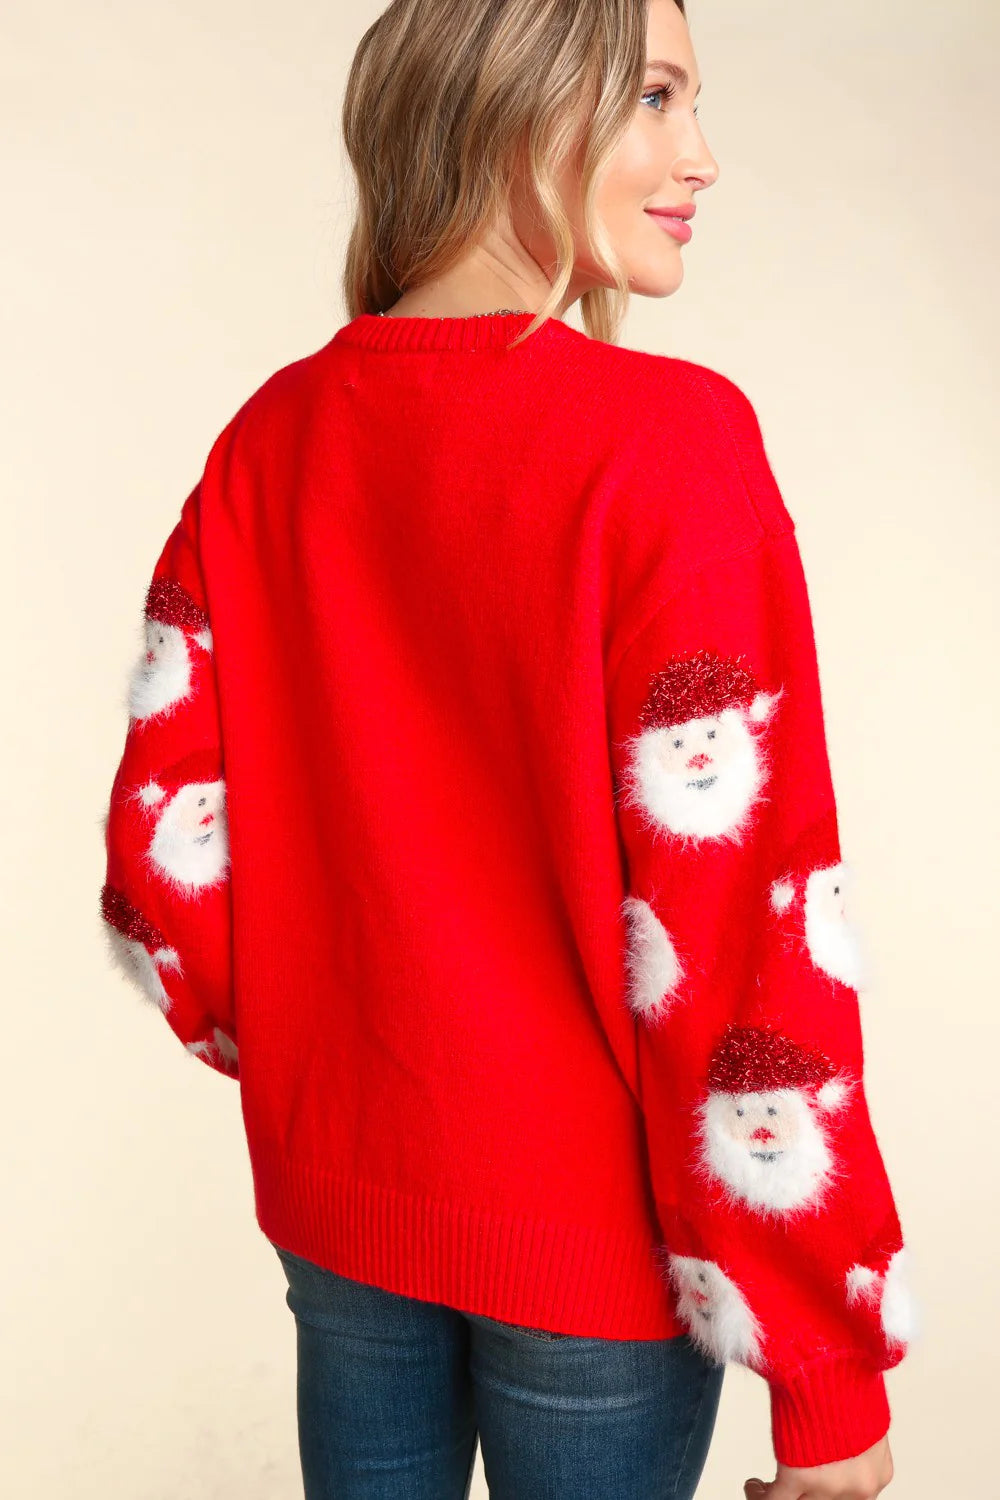 Fuzzy Santa Claus Sweater